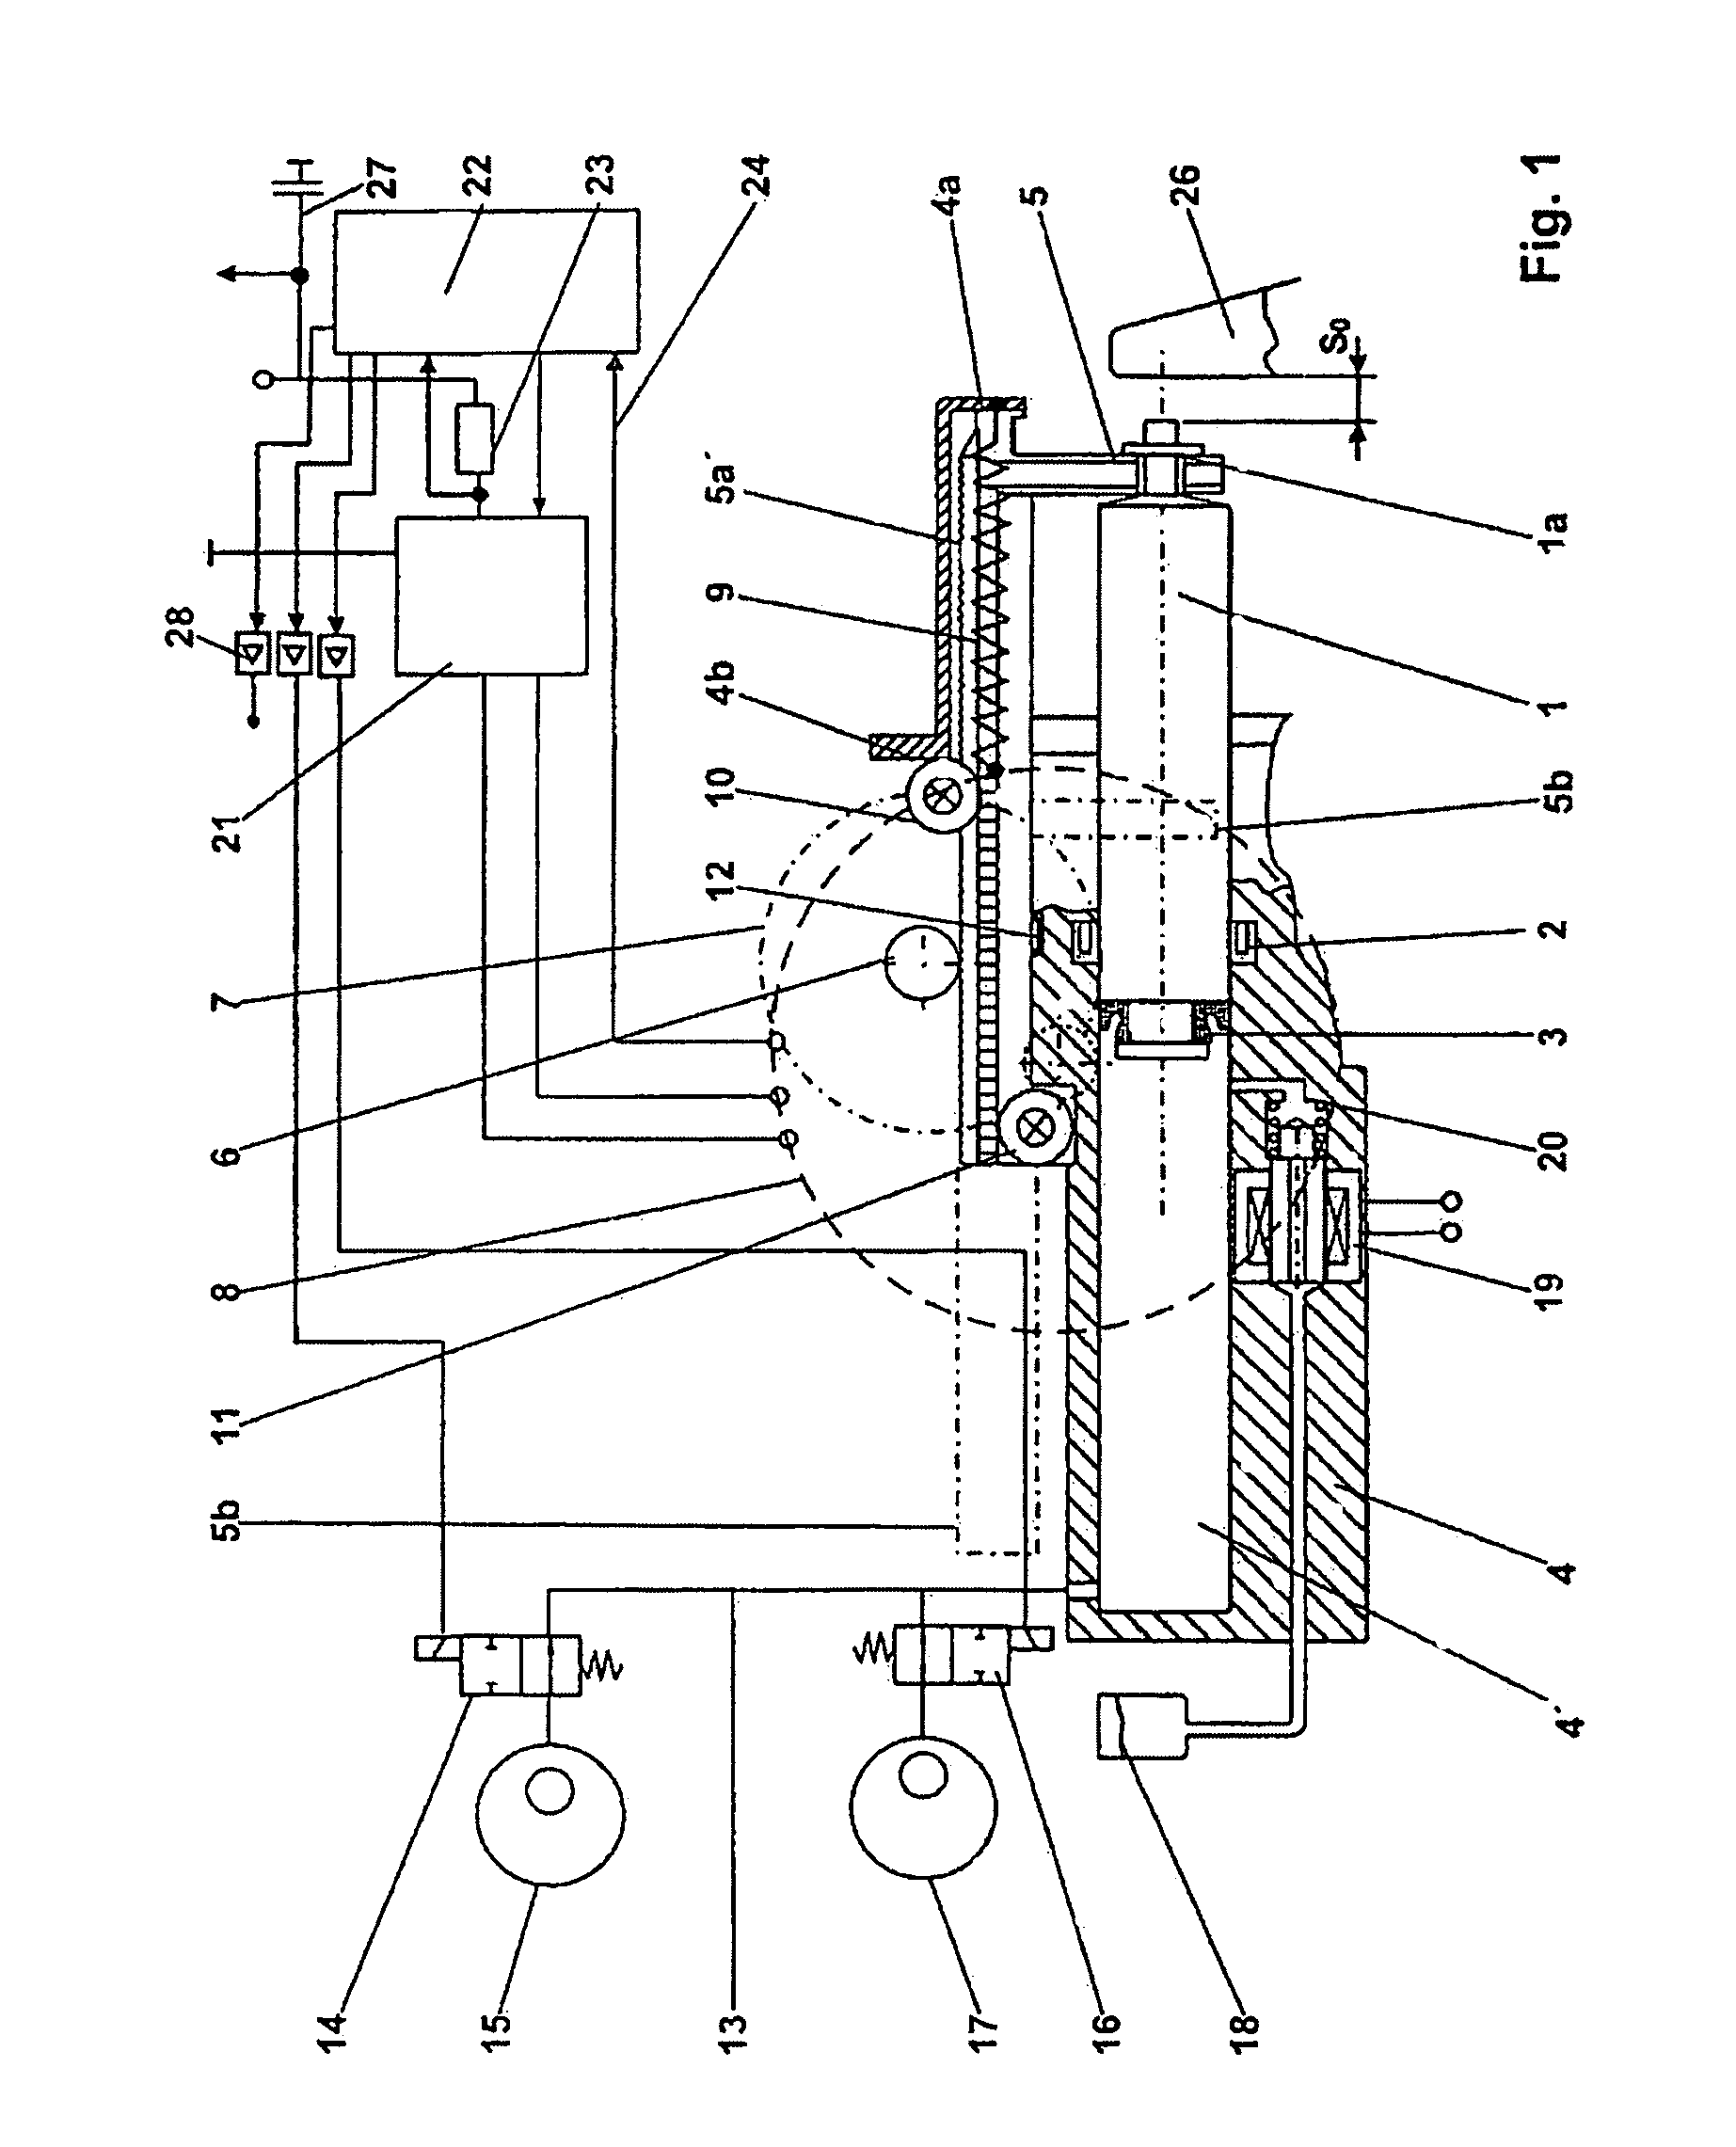 Brake system with electromotively driven piston/cylinder system